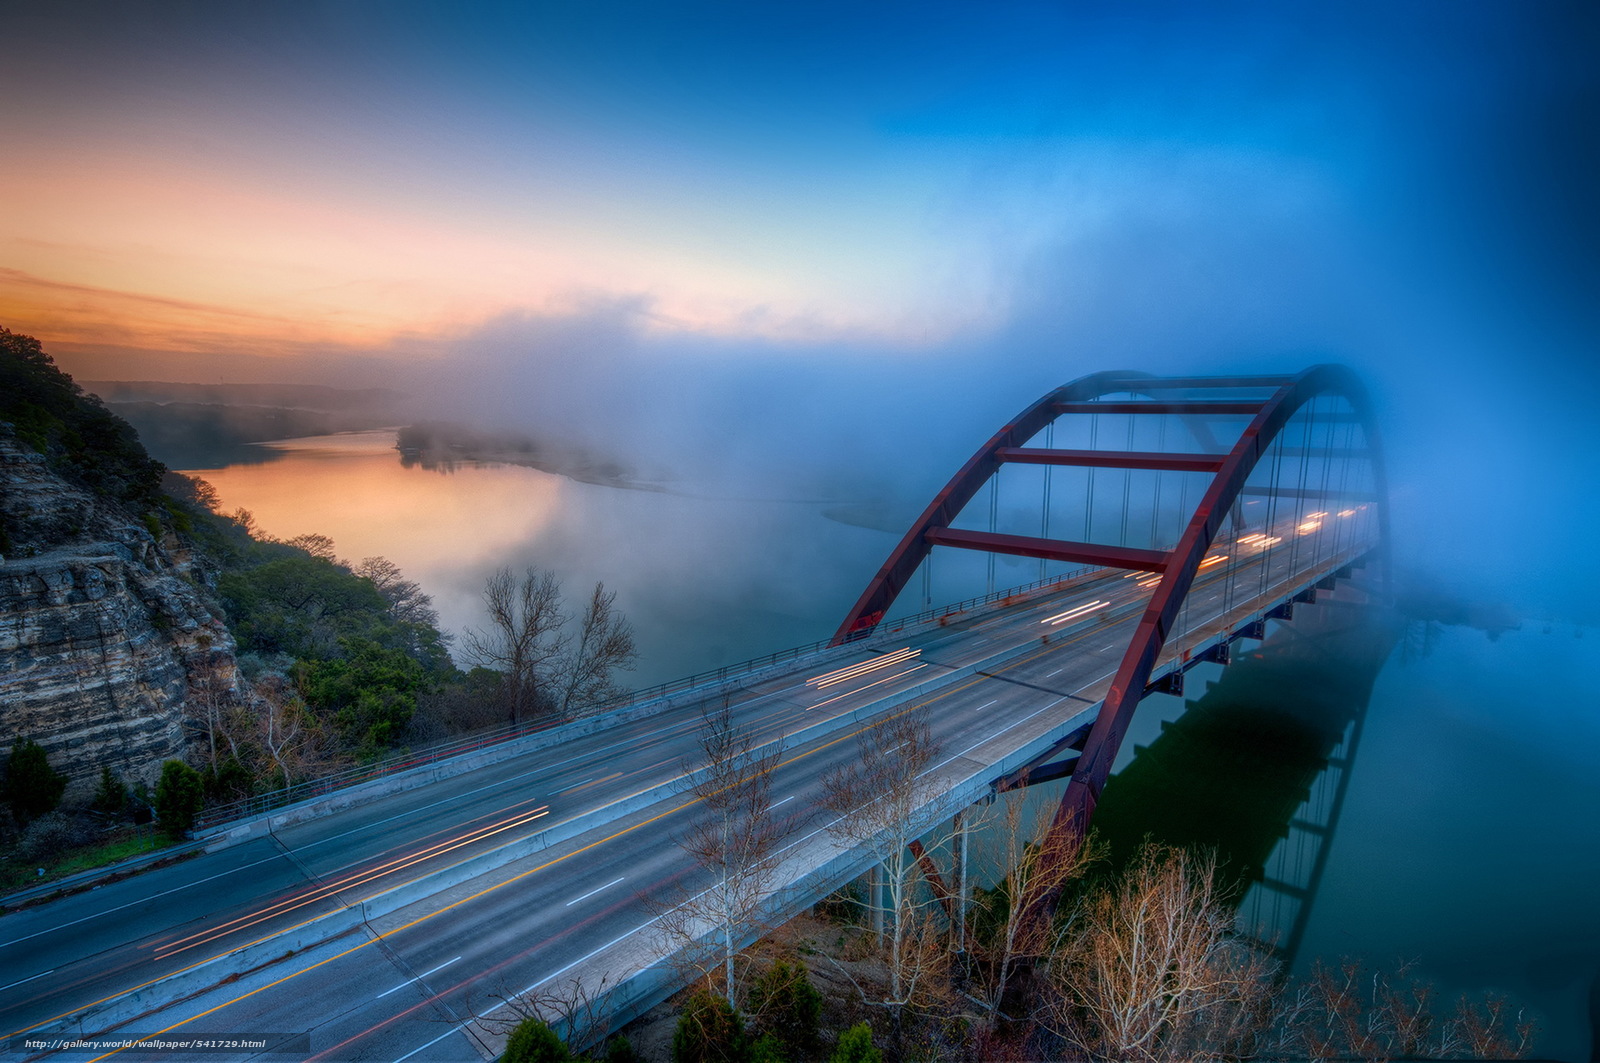 Download wallpaper Morning Fog Pennybacker Bridge austin texas 1600x1063